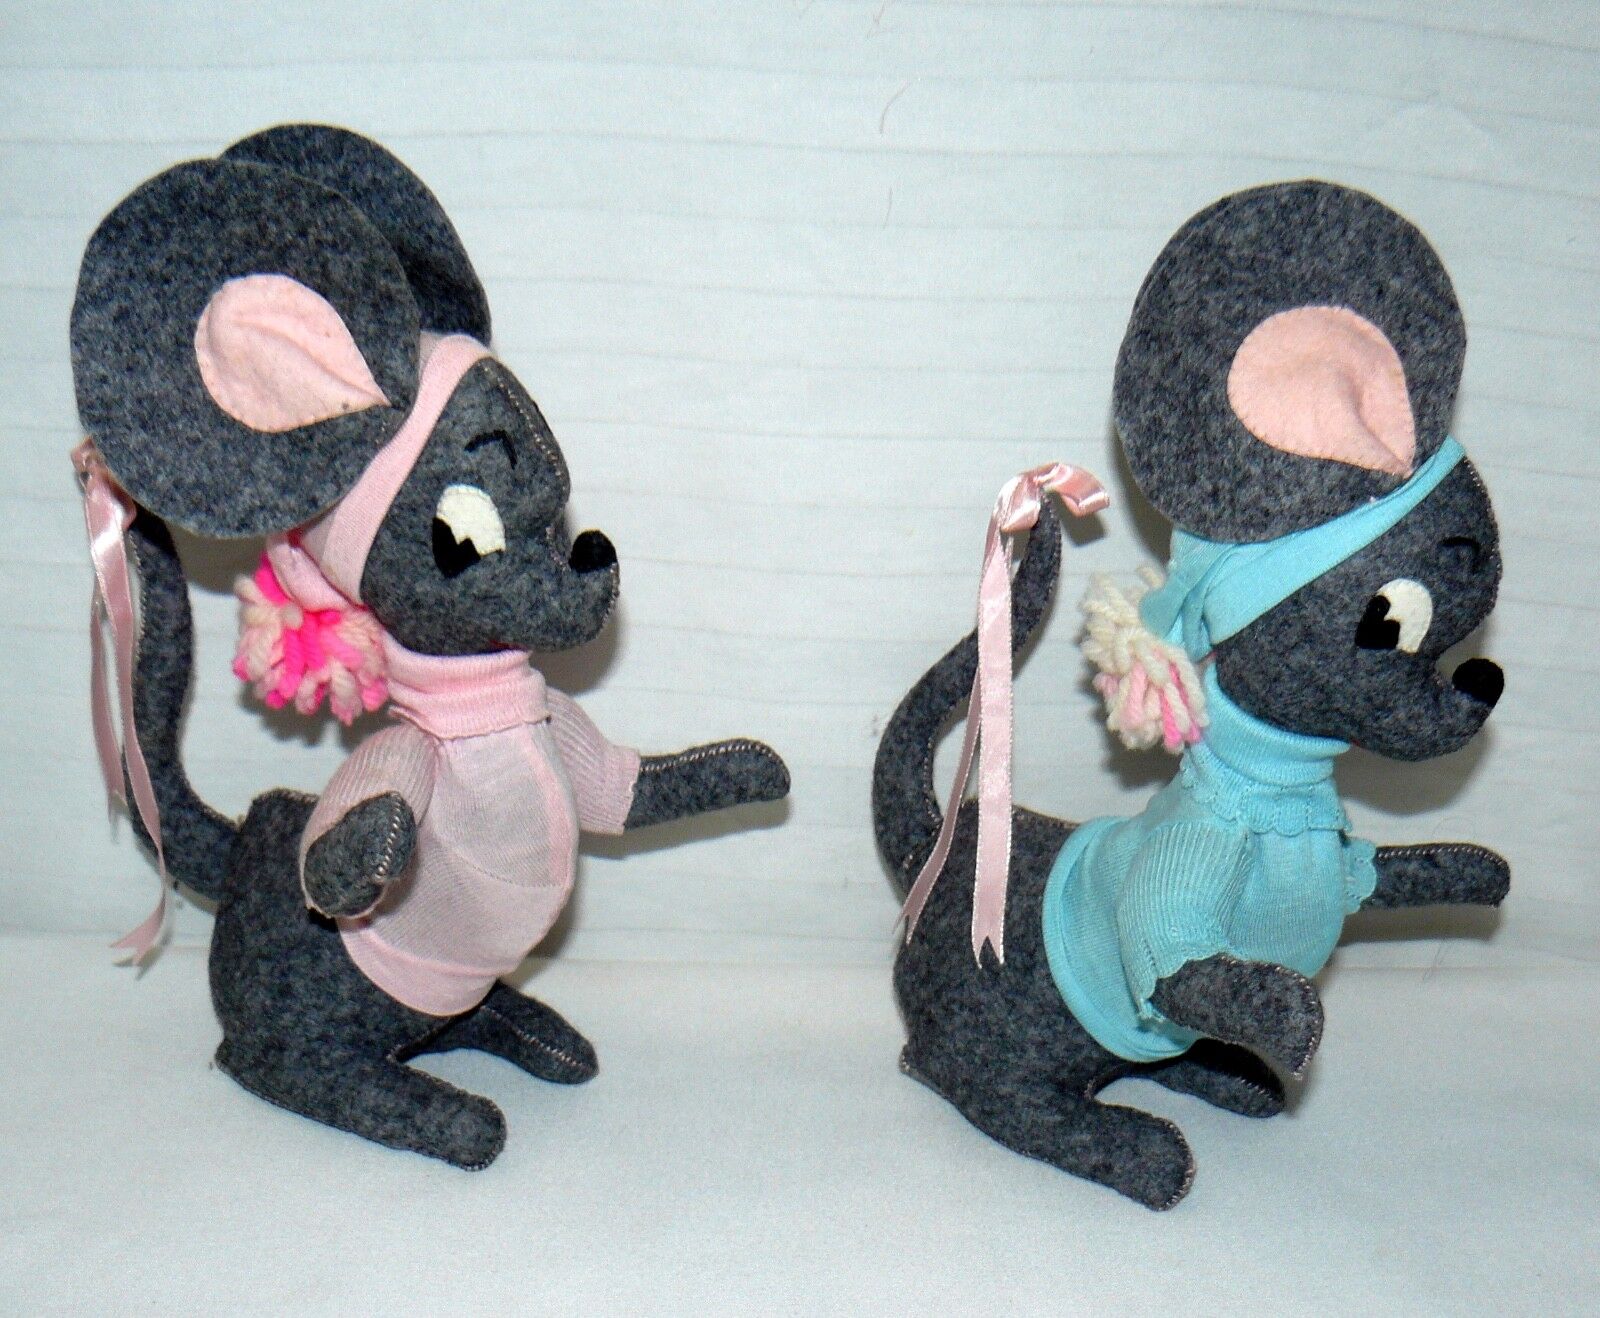 2 Felt Mice Hand Crafted Girl & Boy 10" Pair Mice No Brand